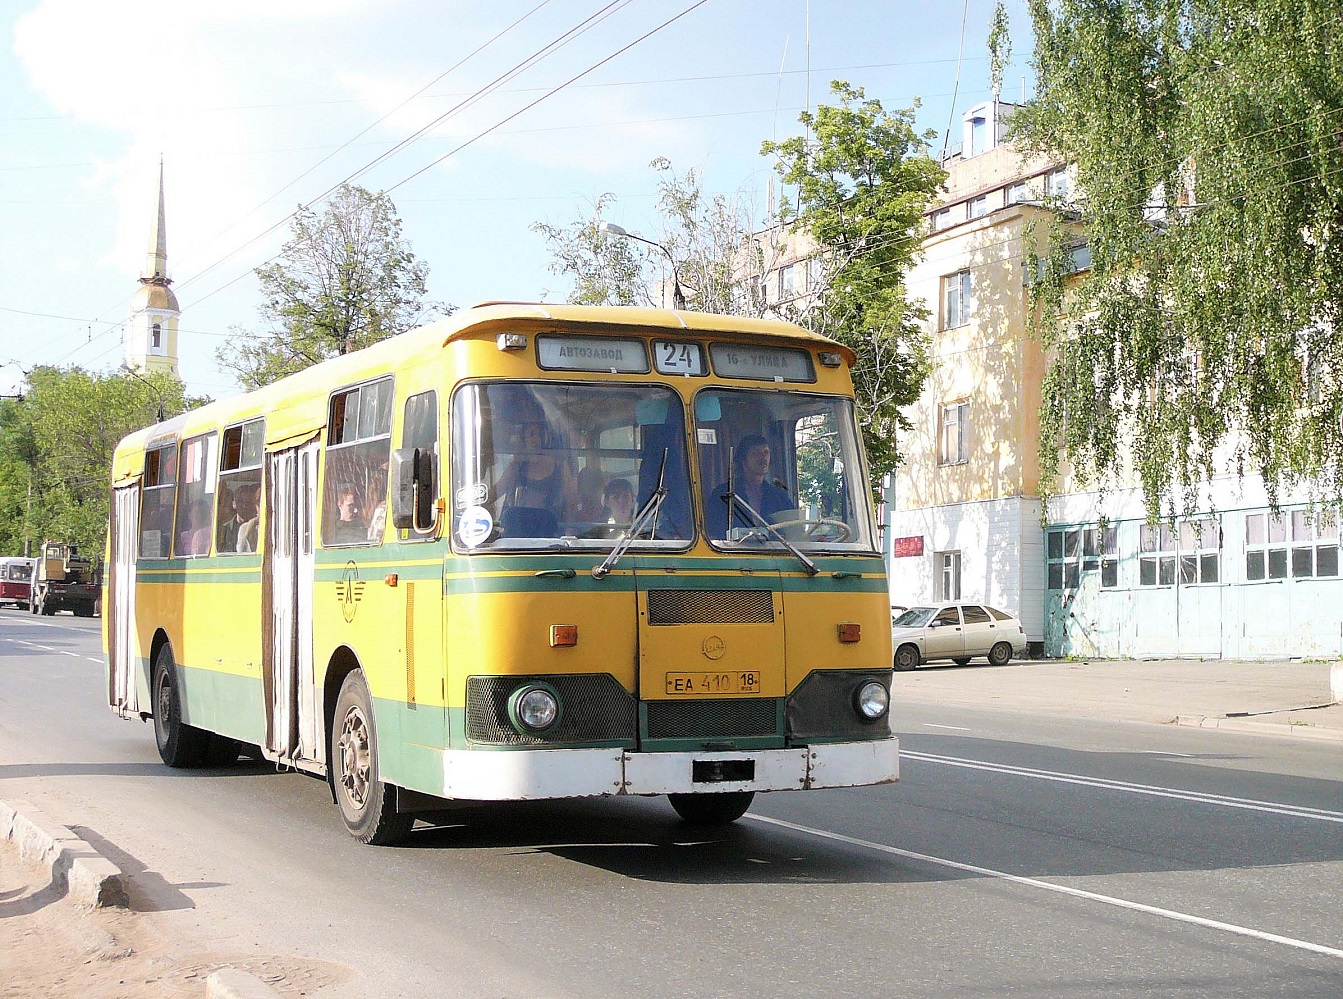 Izhevsk, LiAZ-677М č. ЕА 410 18